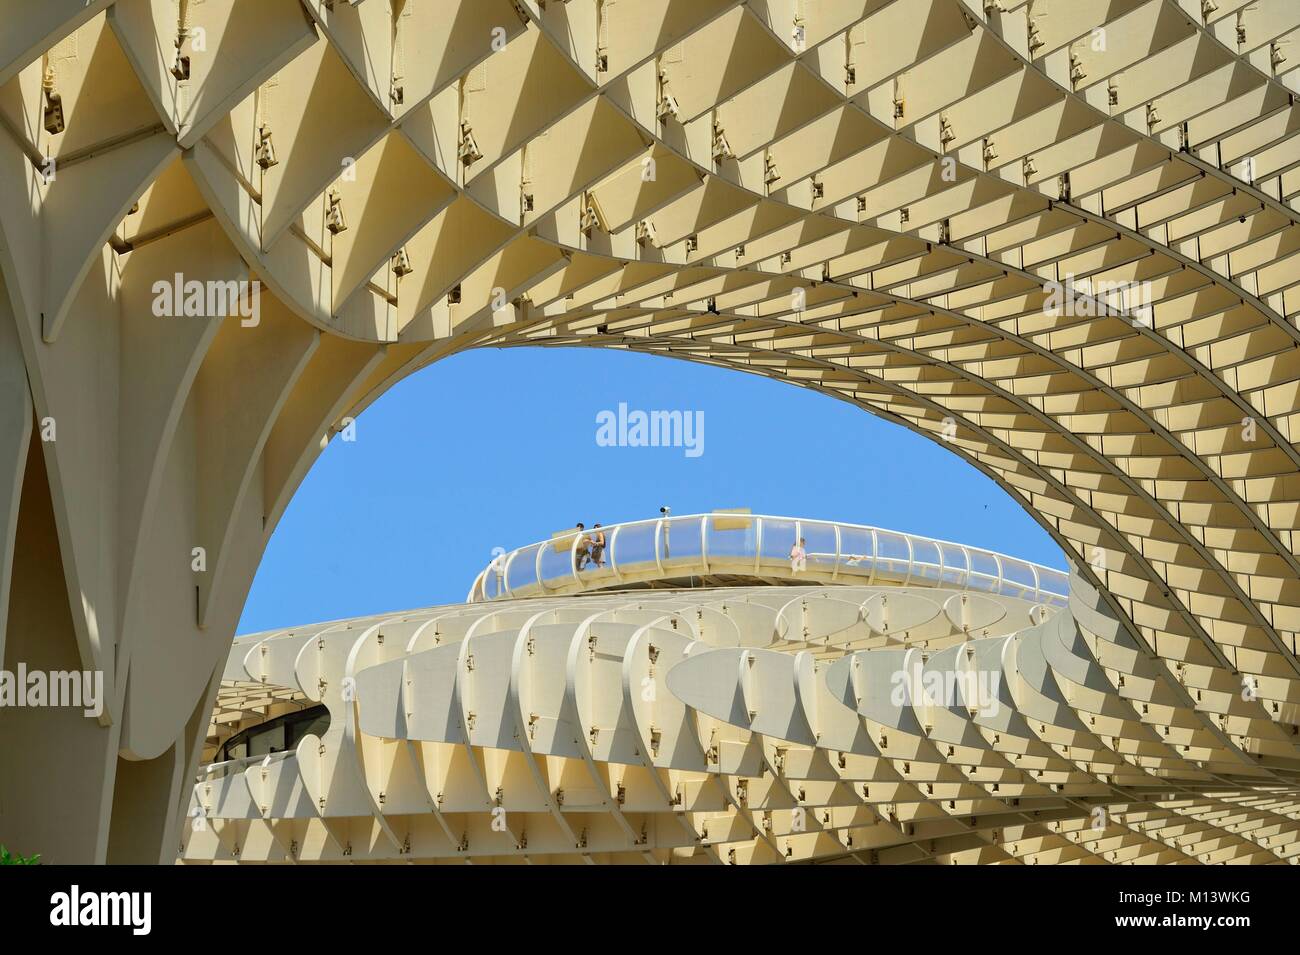 Spain, Andalusia, Sevilla, Encarnation Regina district, Plaza de la Encarnacion, the Metropol Parasol footbridge built in 2011 by architect Jurgen Mayer Hermann Stock Photo